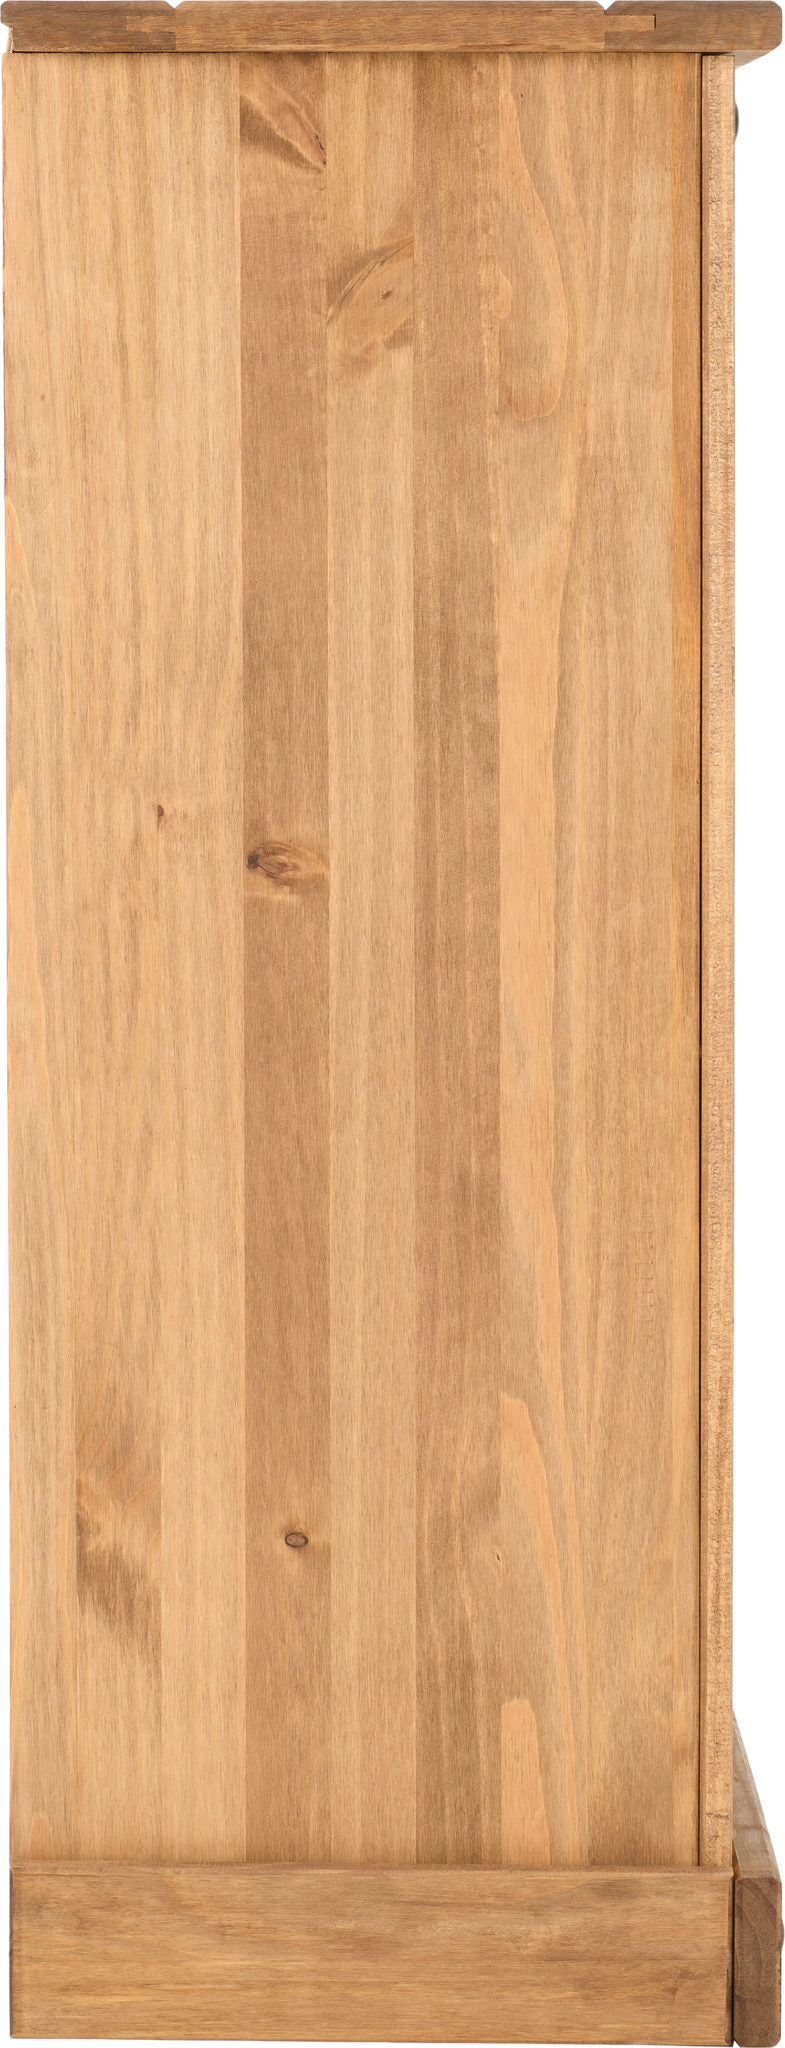 Corona 5 Drawer Narrow Chest - Distressed Waxed Pine